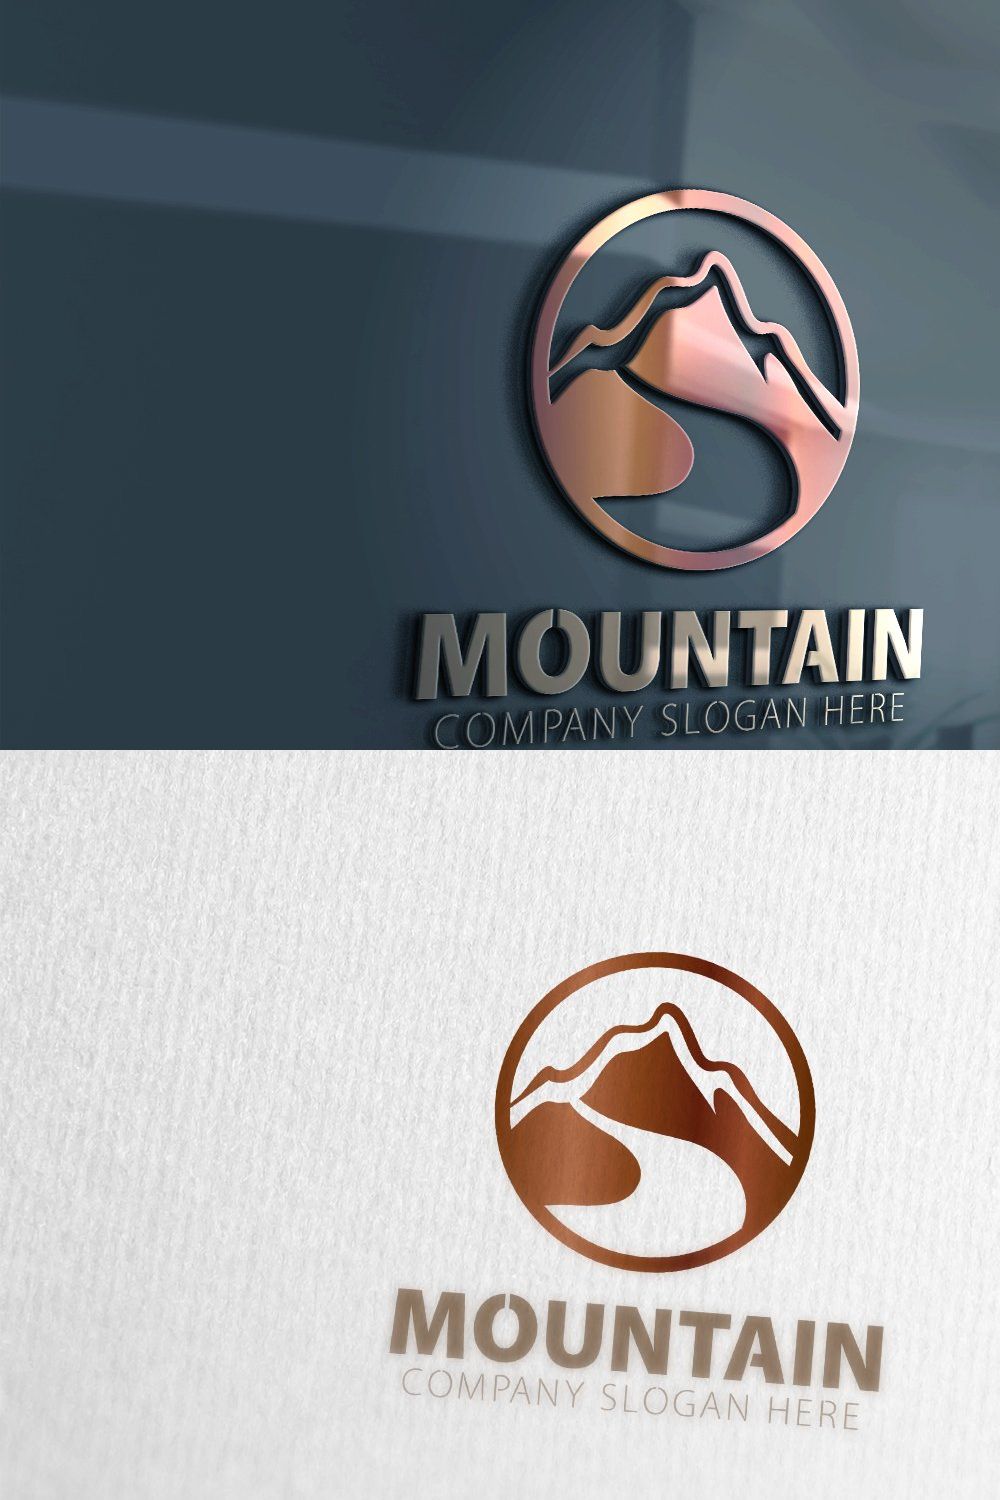 Mountain Logo pinterest preview image.